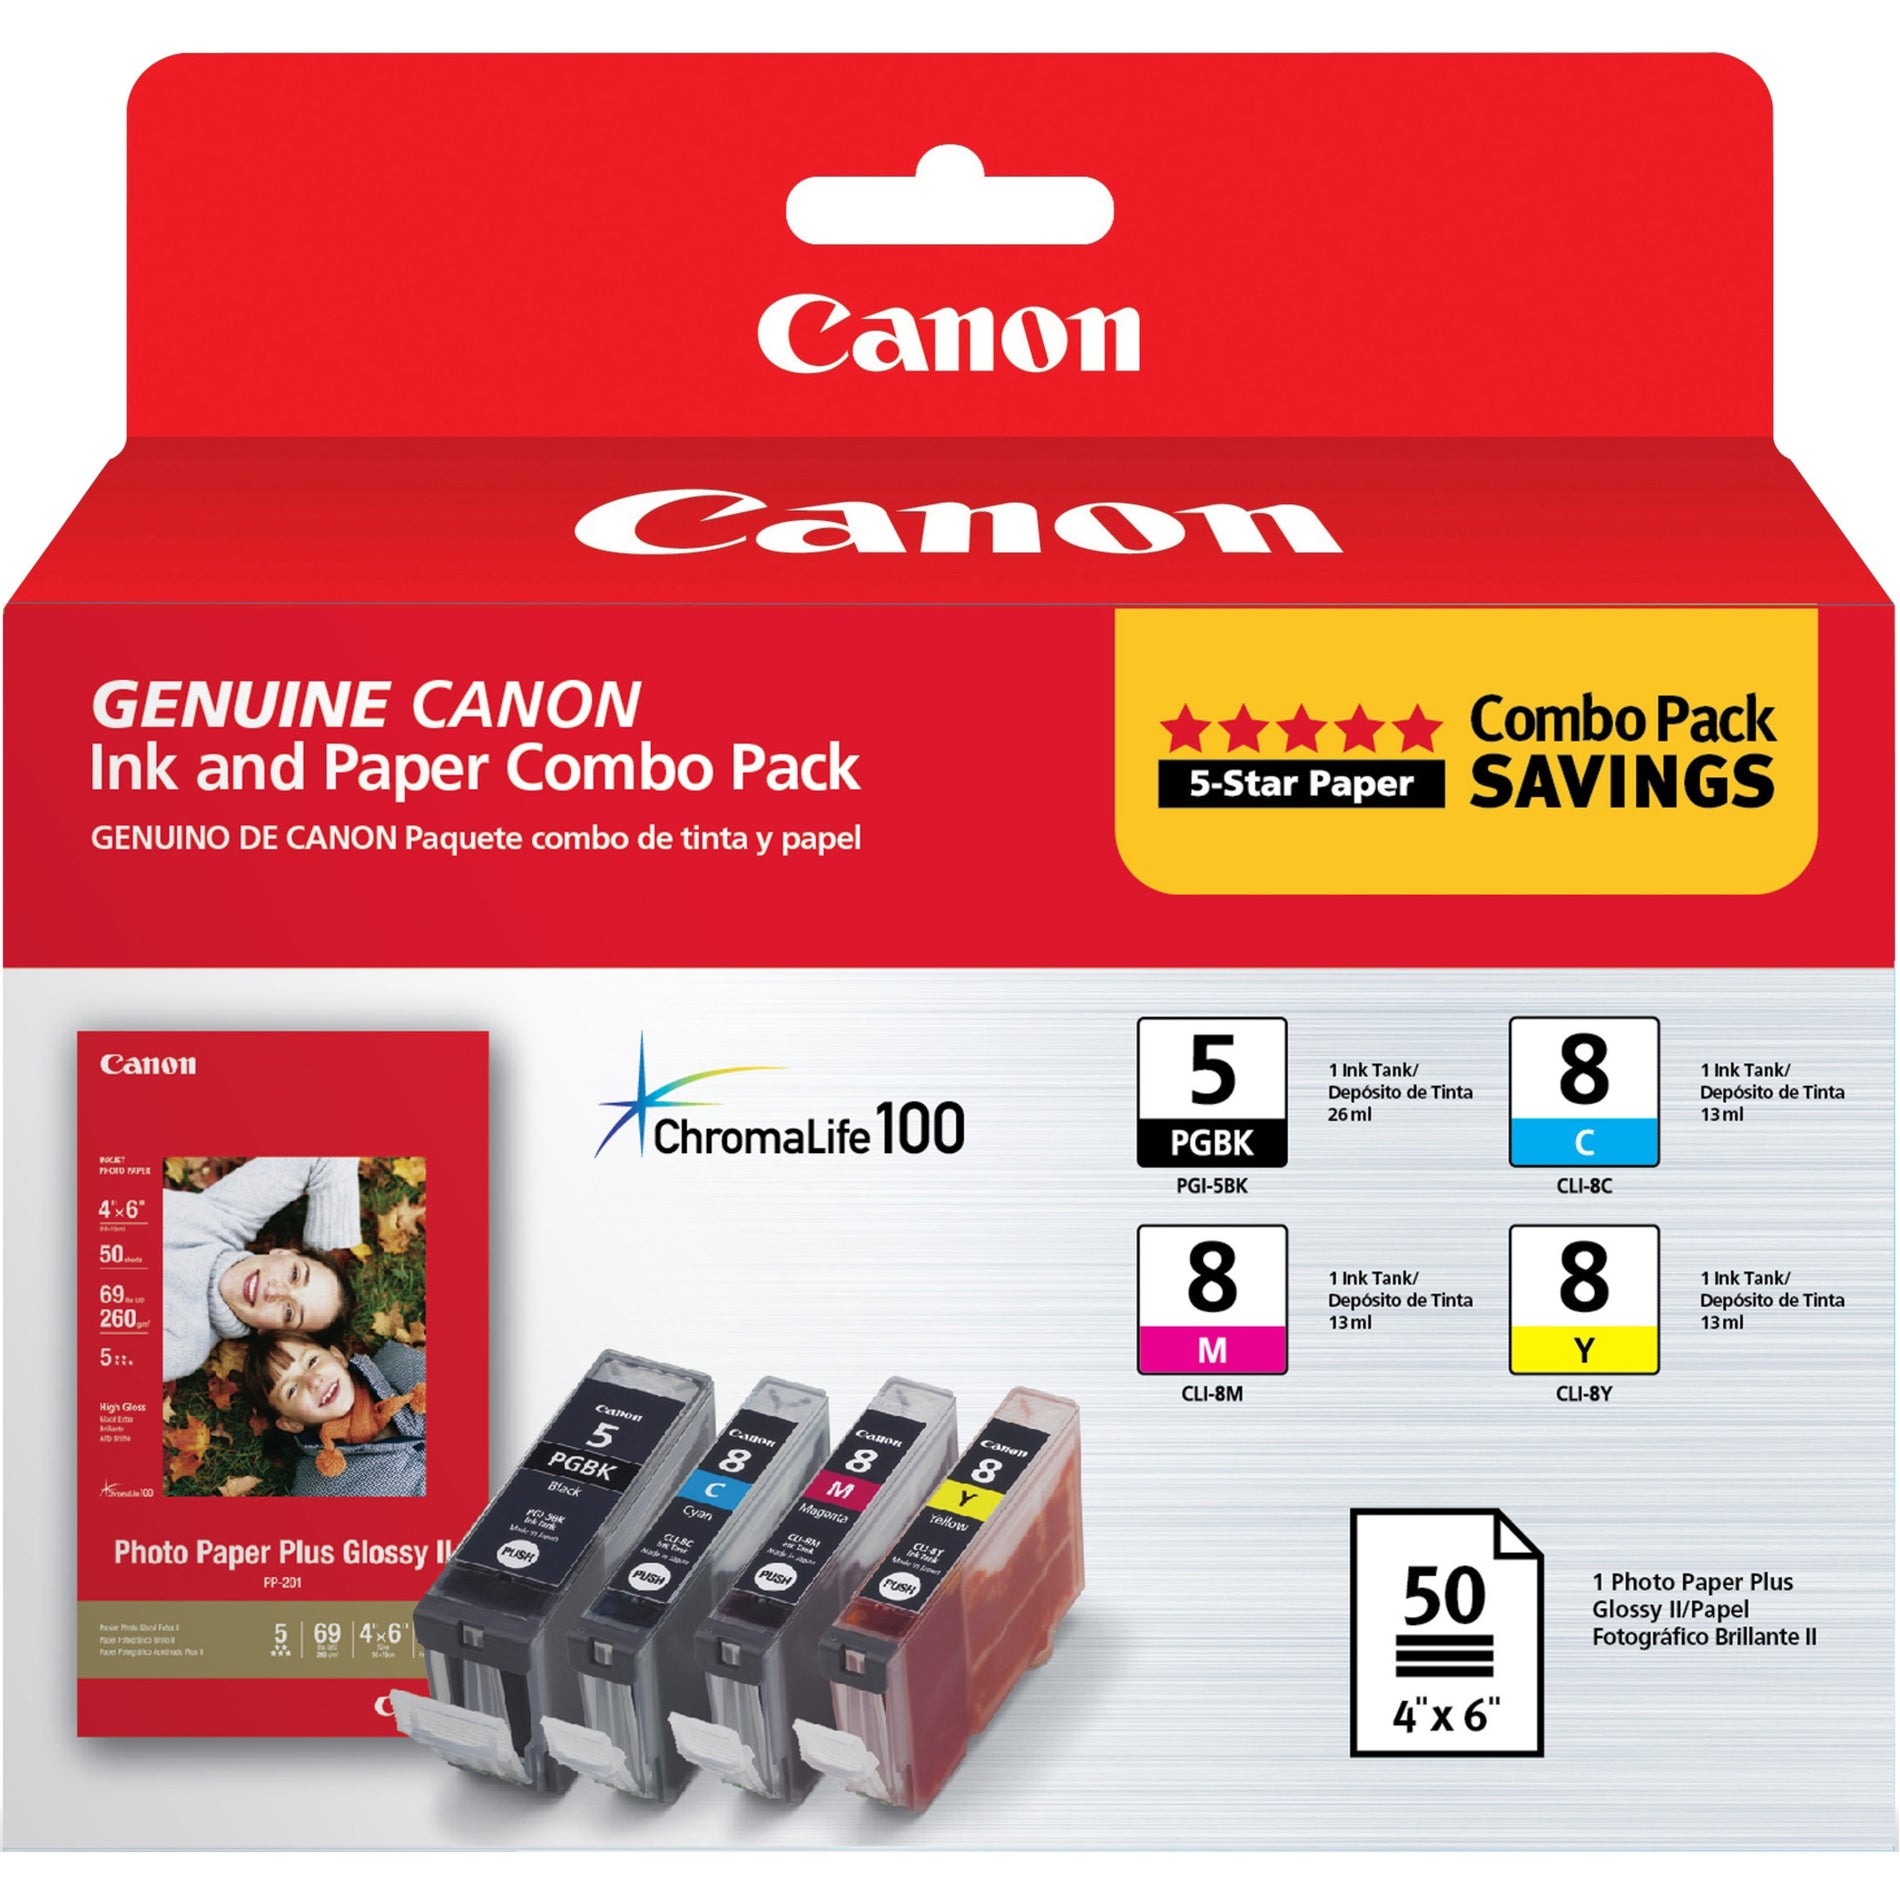 Canon 0628B027 Ink Cartridge, Black, Cyan, Magenta, Yellow